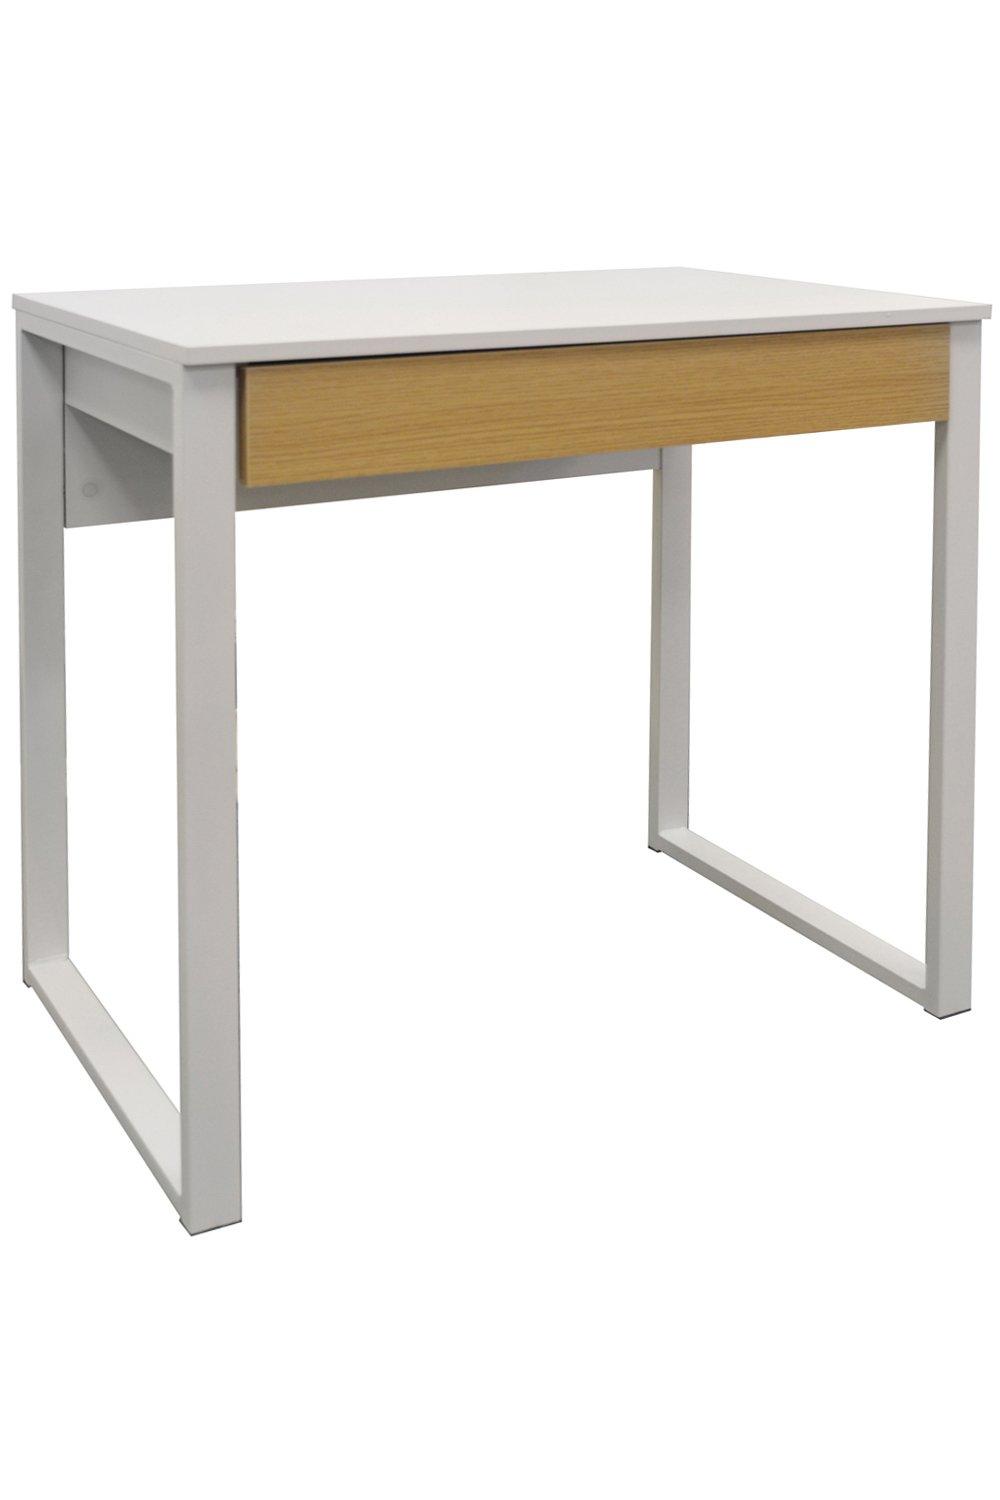 'Loop' - Compact Office Workstation  Computer Desk  Dressing Table - White  Oak